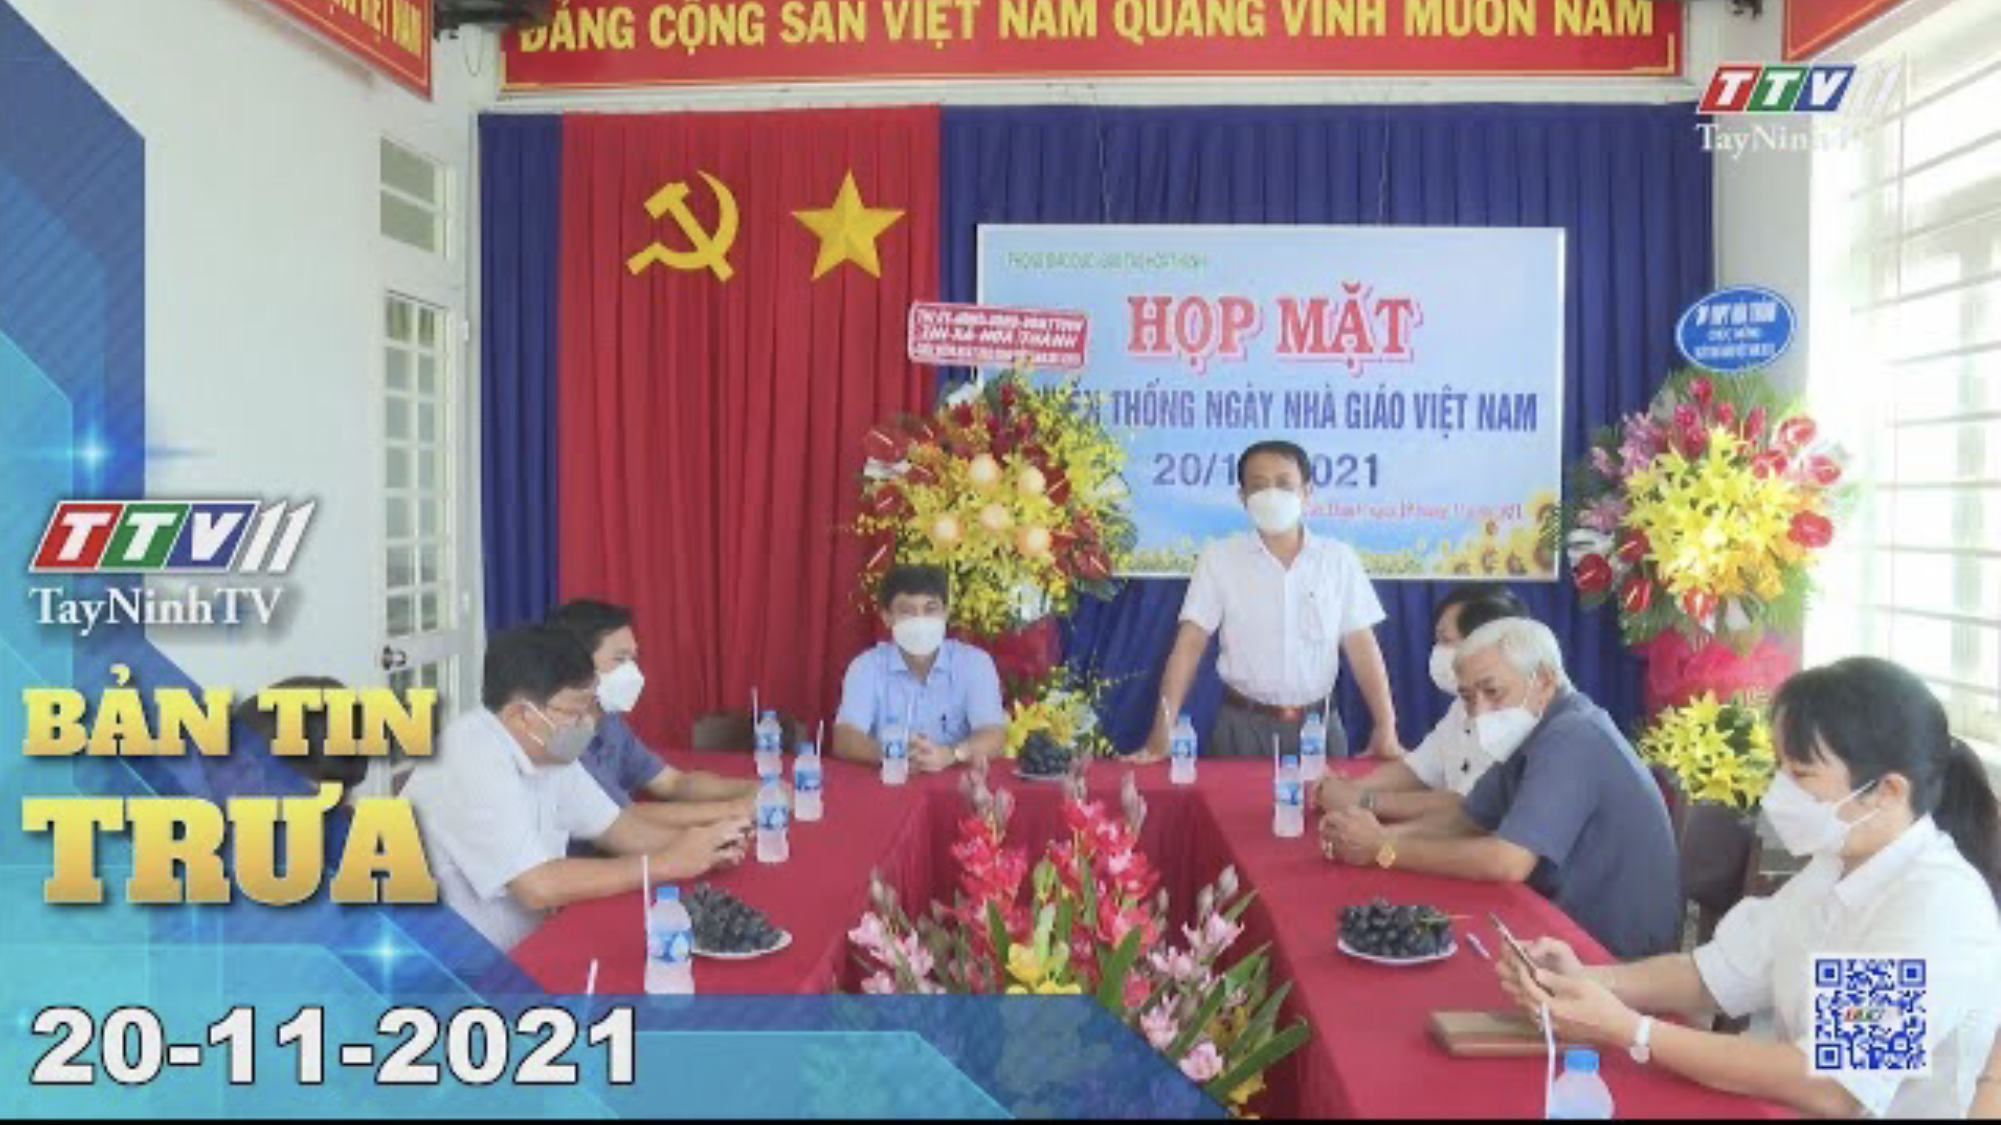 BẢN TIN TRƯA 20/11/2021 | Tin tức hôm nay | TayNinhTV 